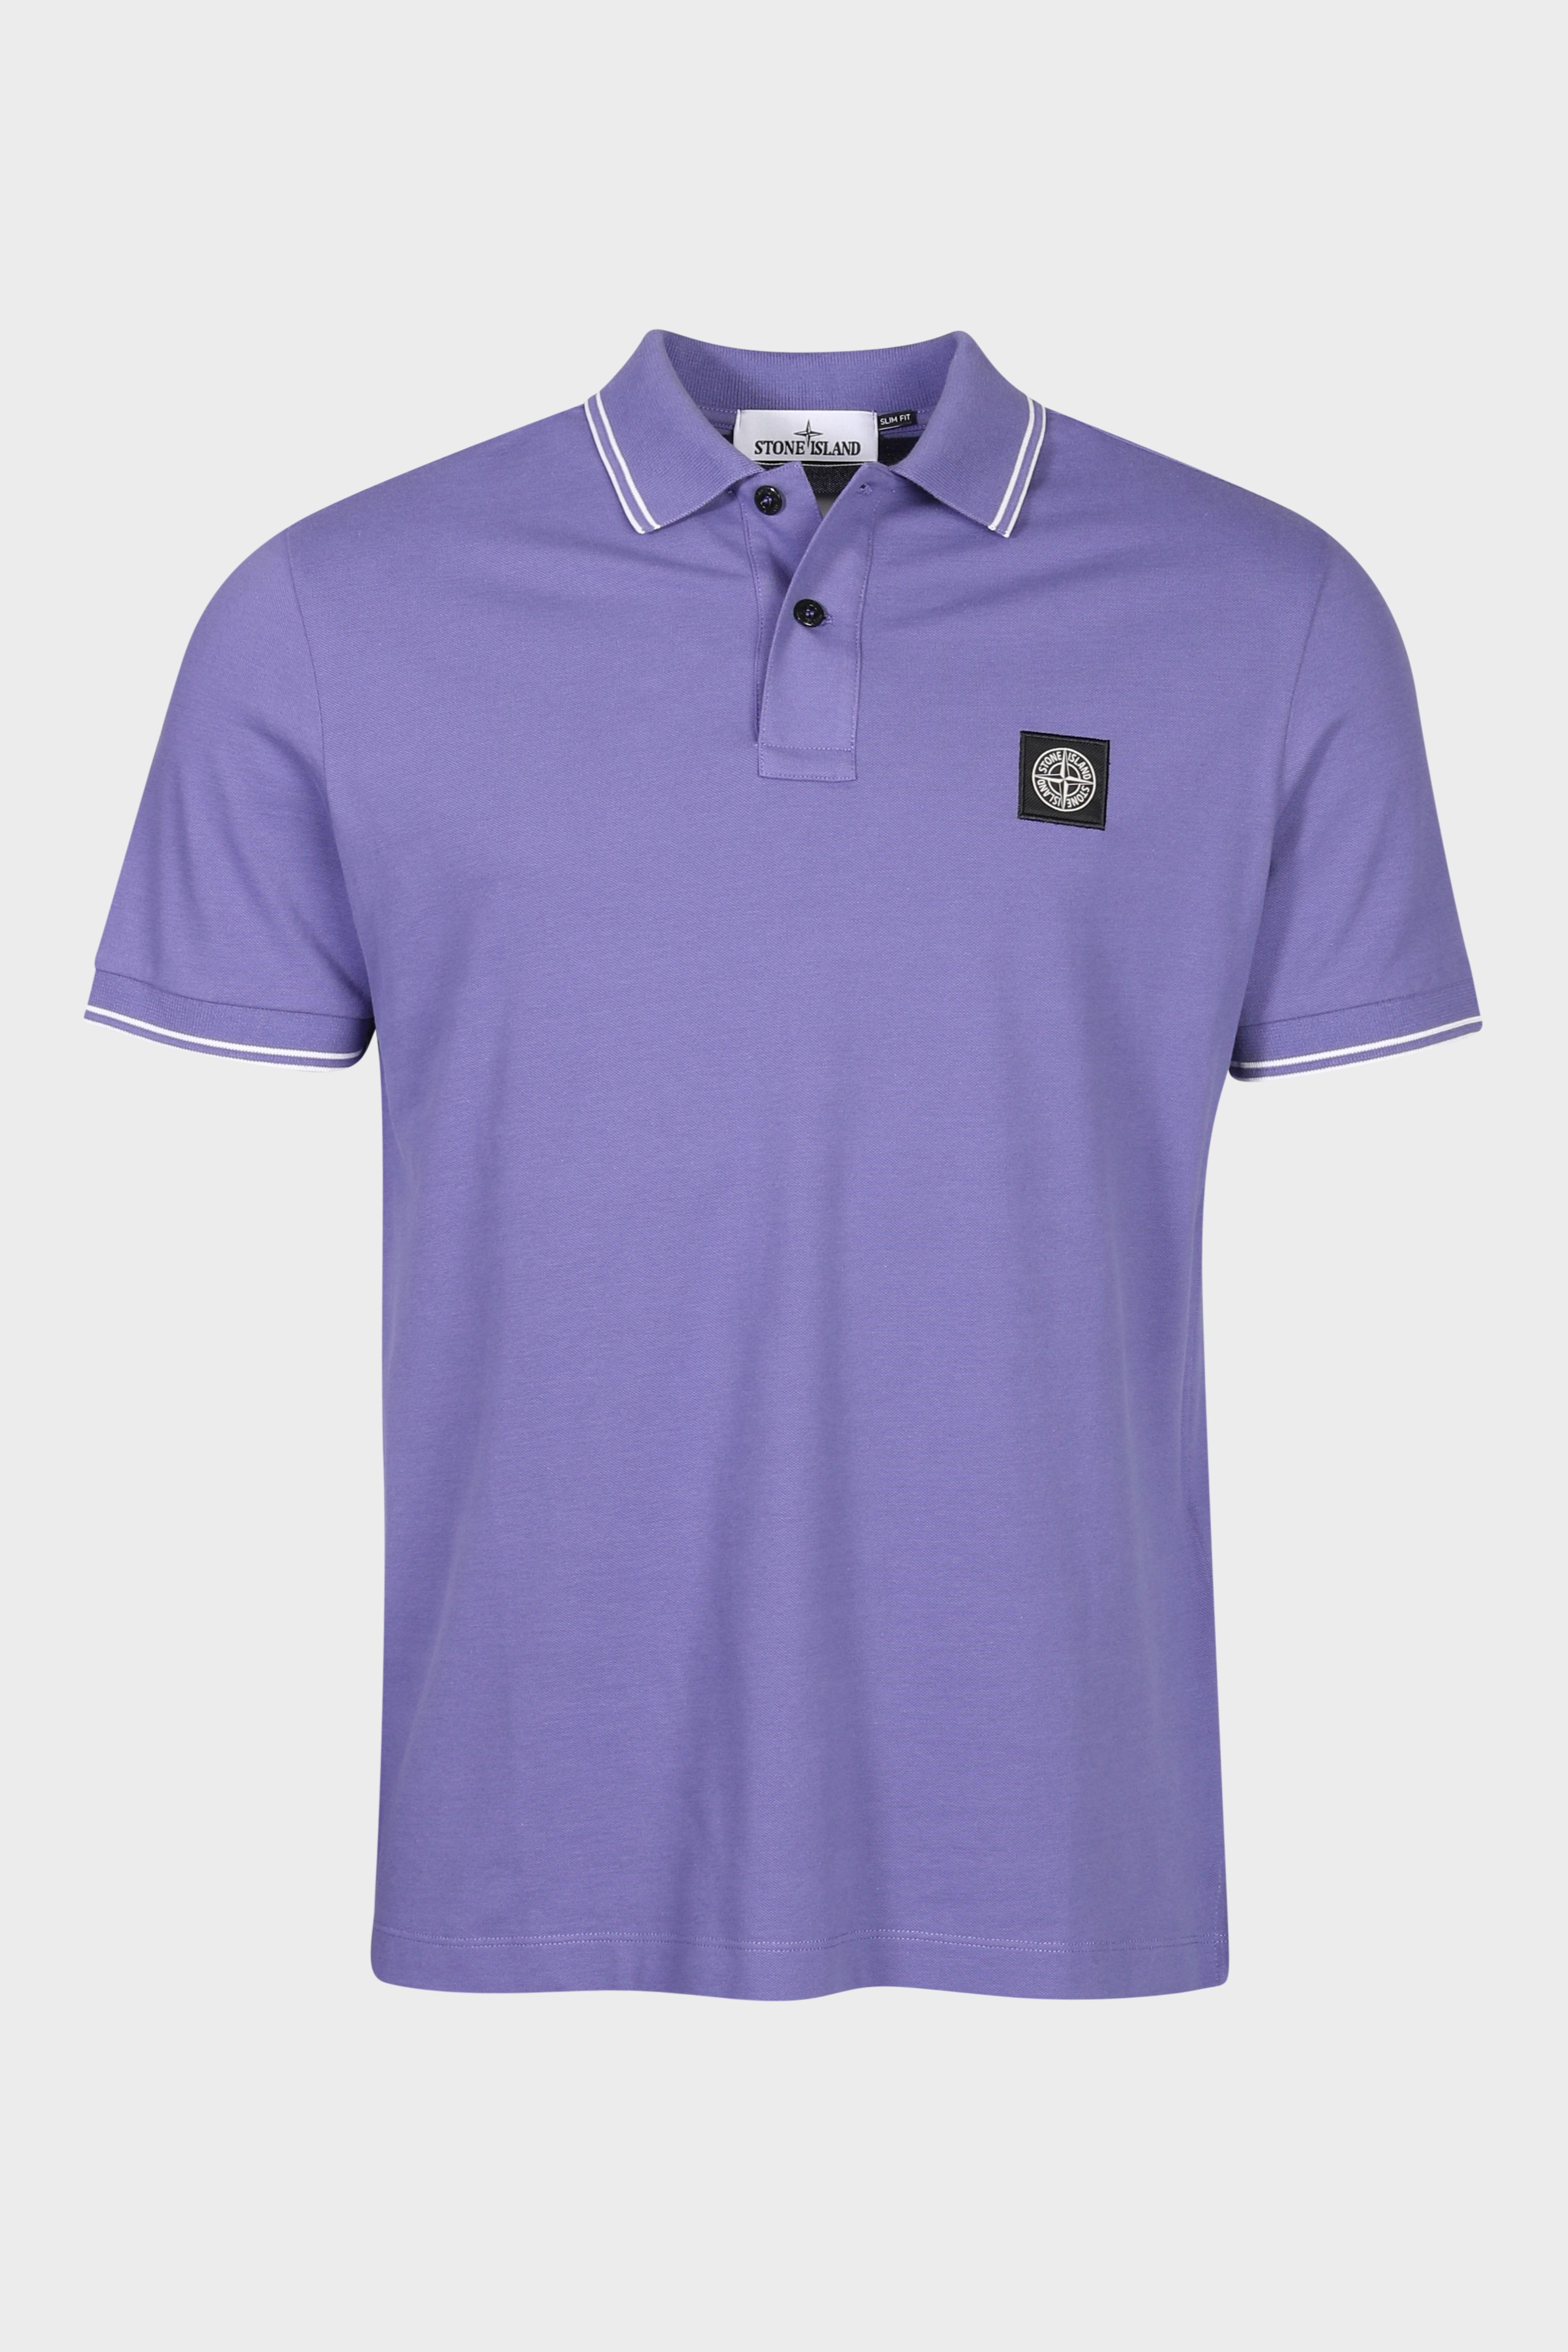 STONE ISLAND Slim Fit Polo Shirt in Lilac XL